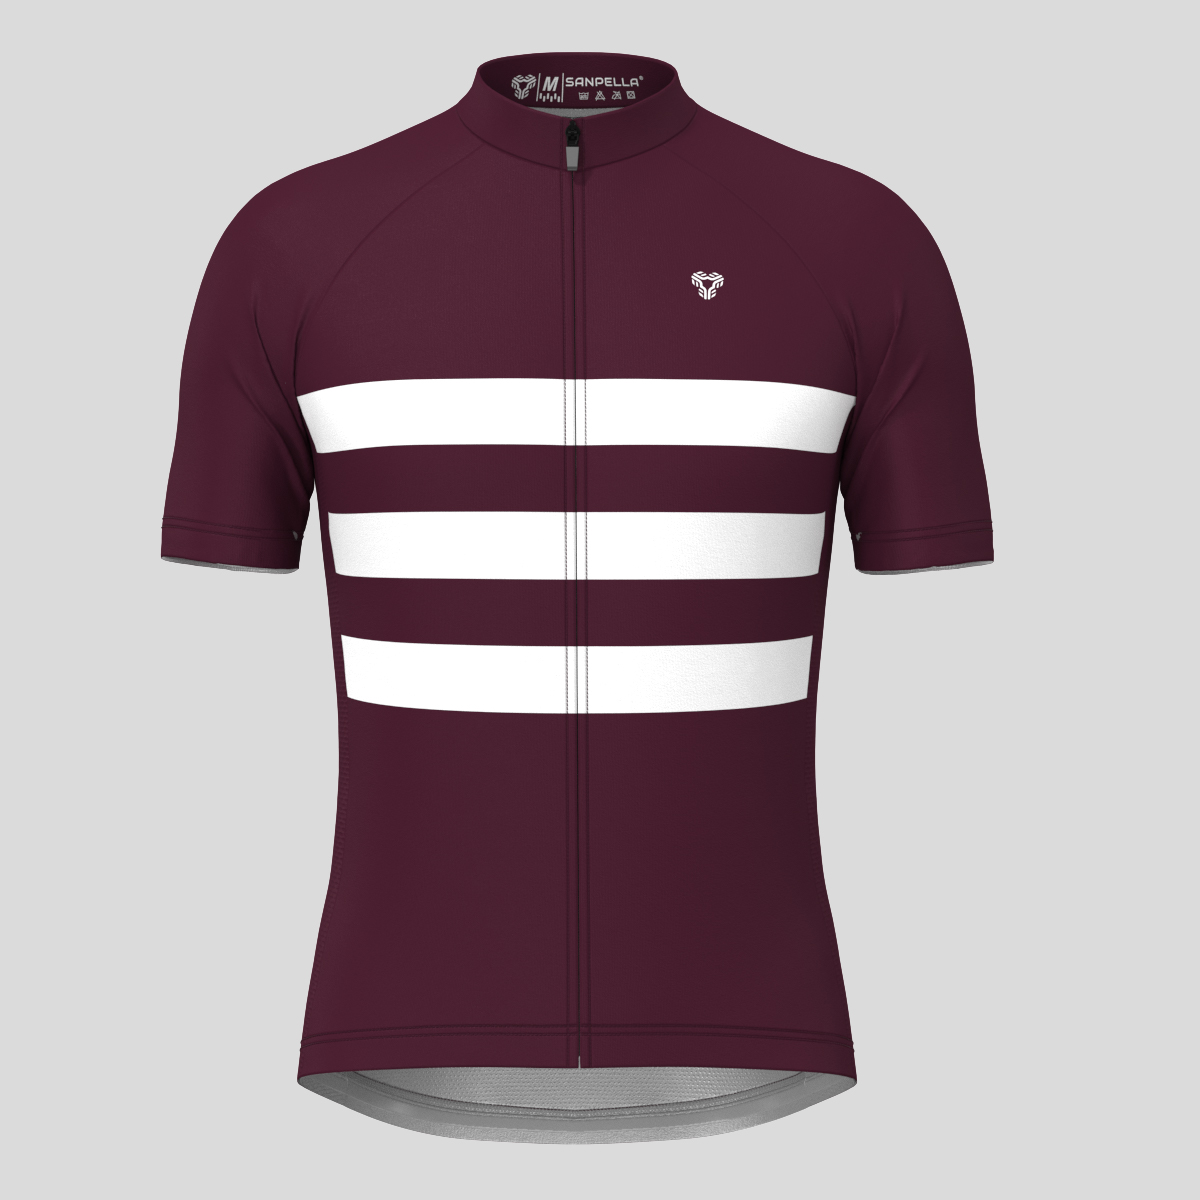 Men's Classic Stripes Cycling Jersey - Burgundy